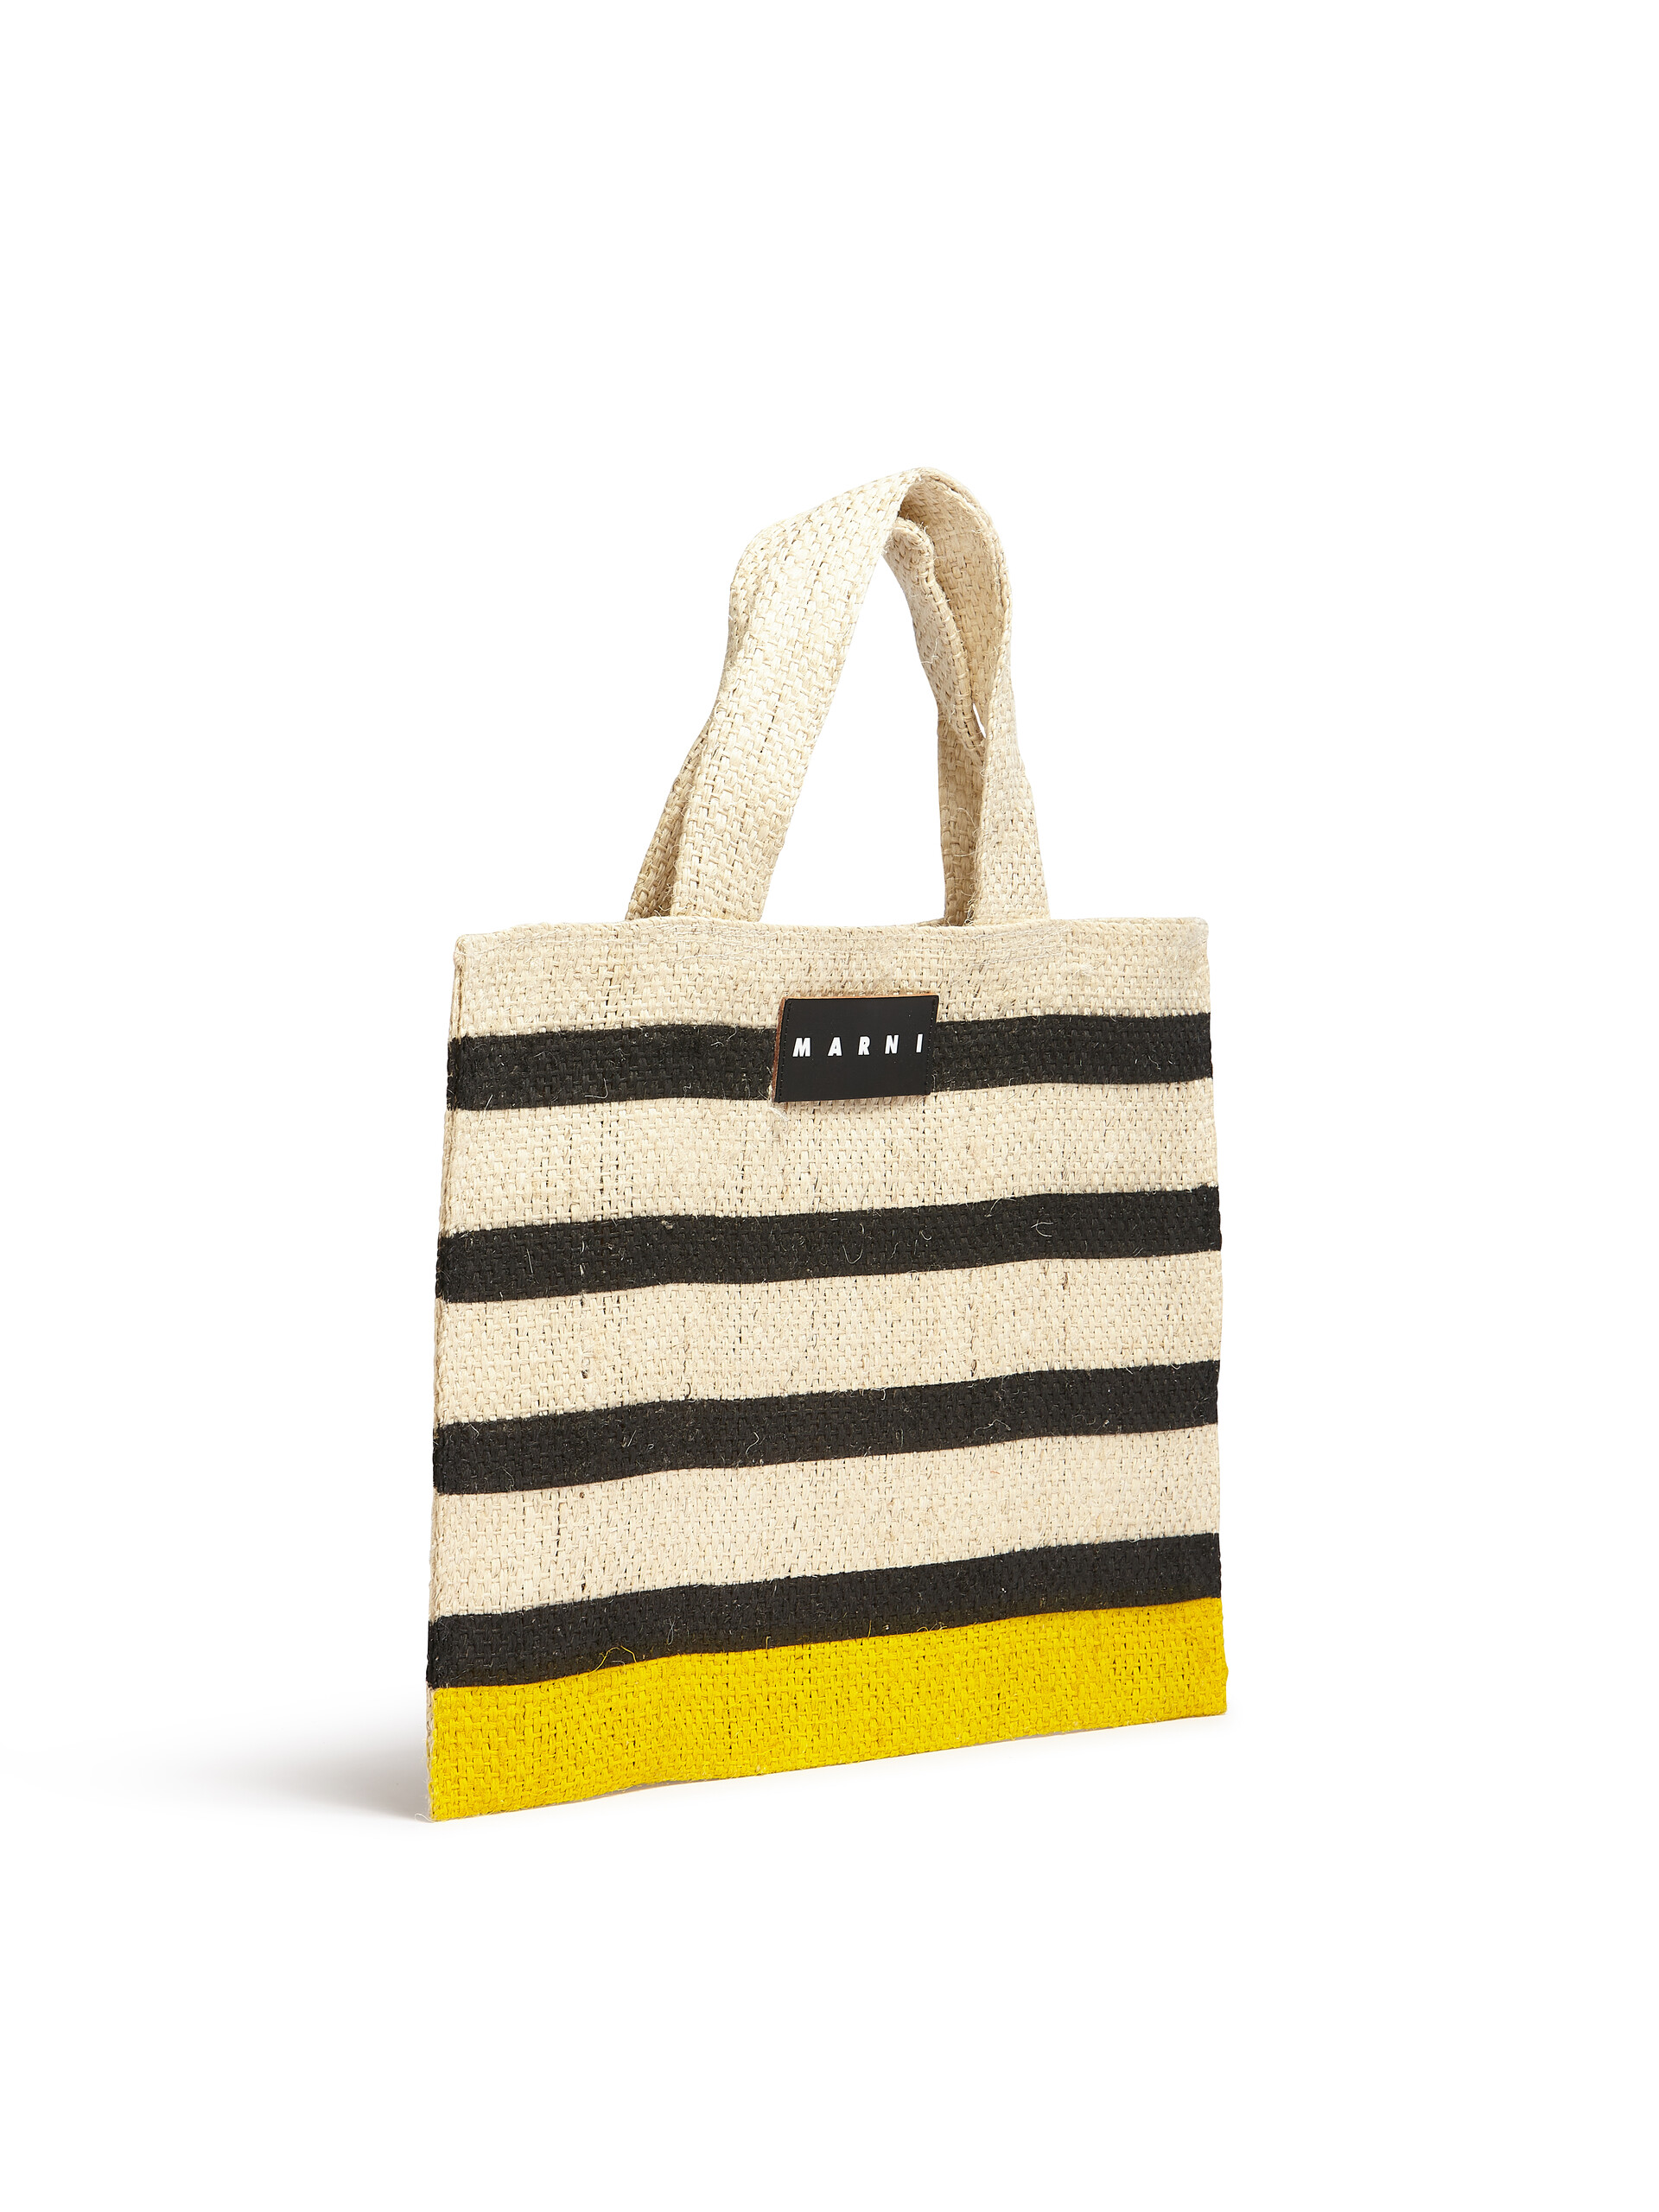 MARNI MARKET small bag in black and yellow natural fiber - Bags - Image 2